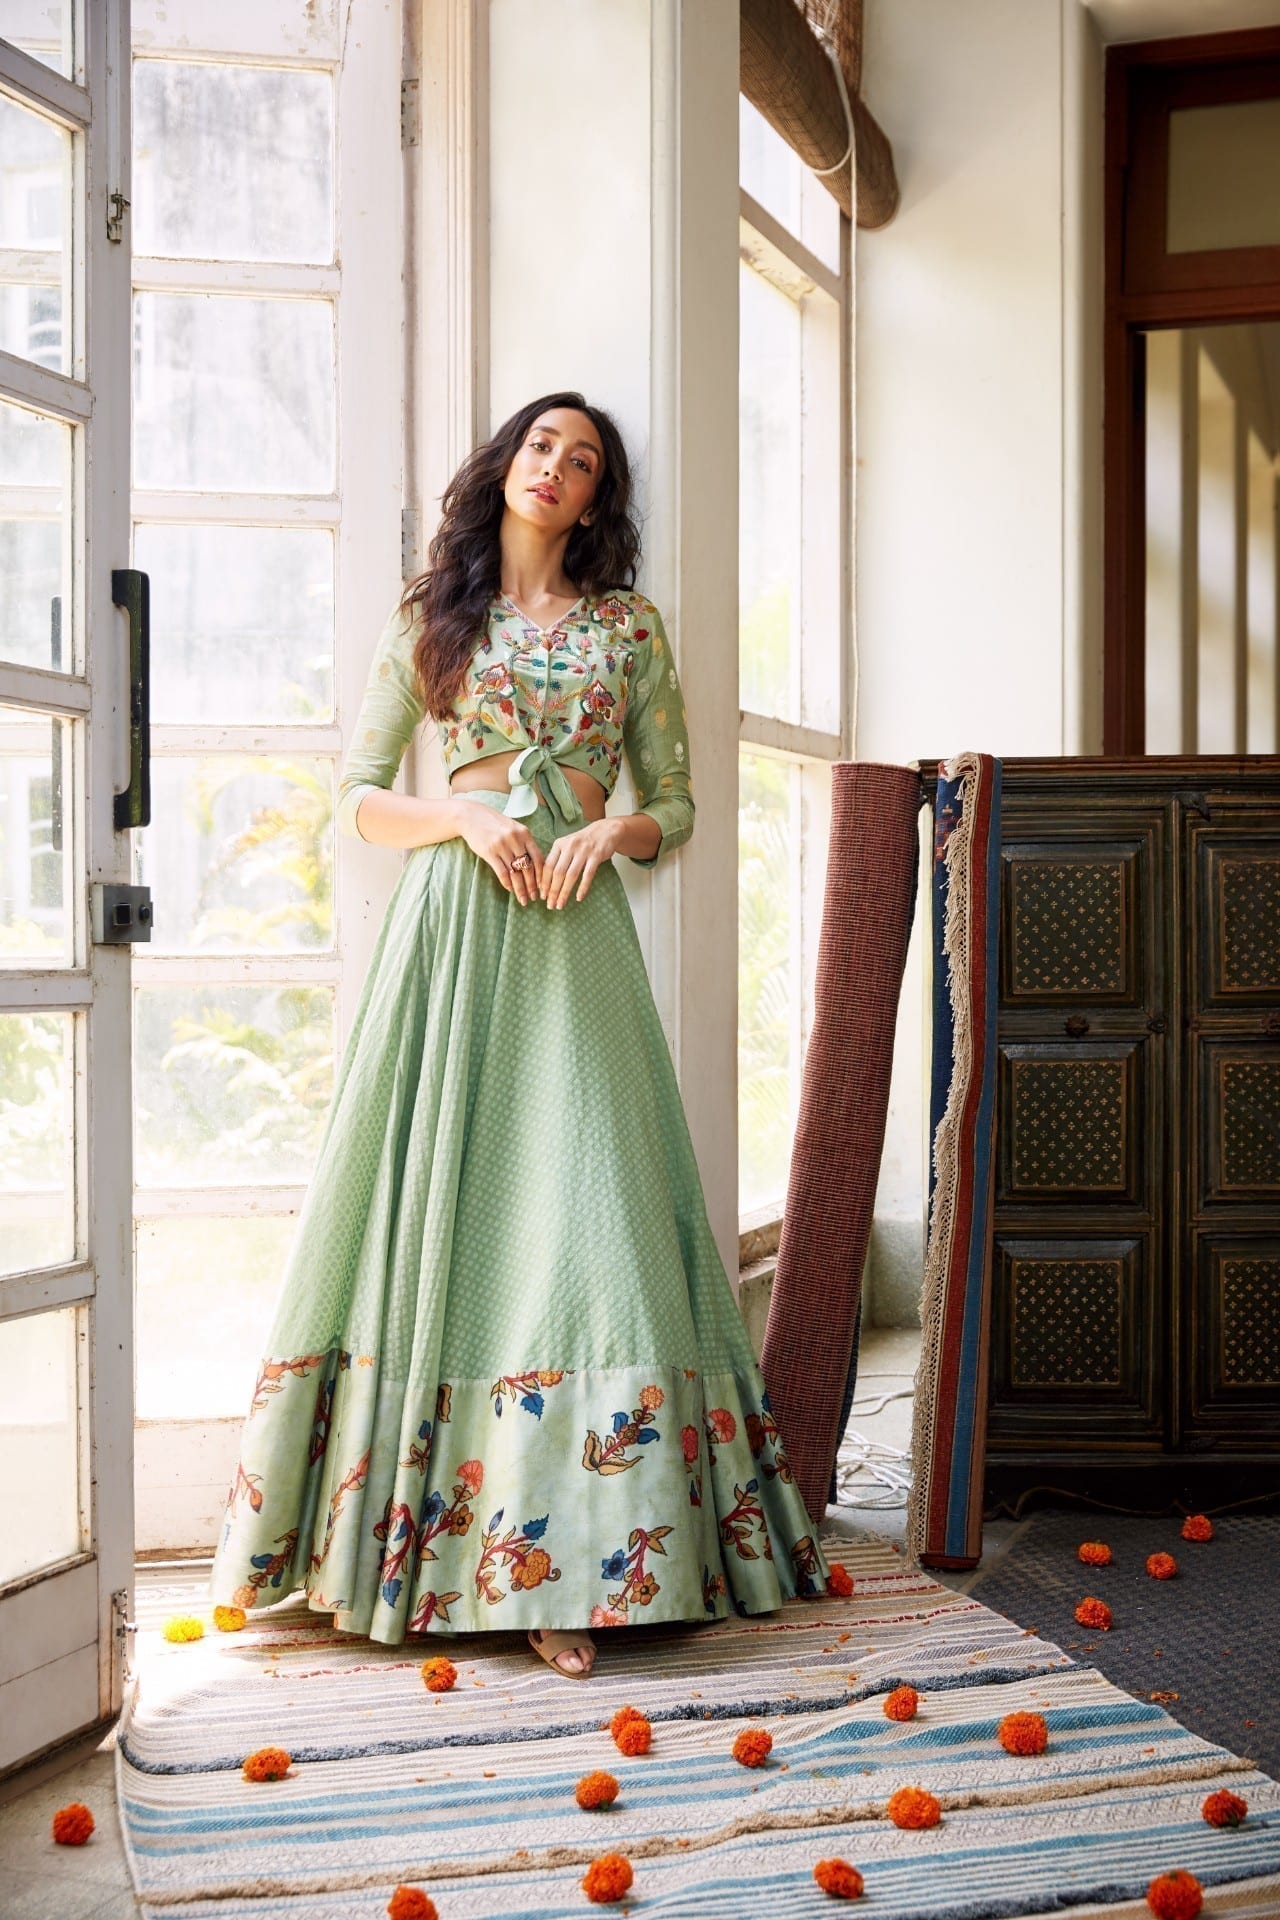 Sheer Long Sleeves Lace Wedding Gown Satin Skirt – loveangeldress